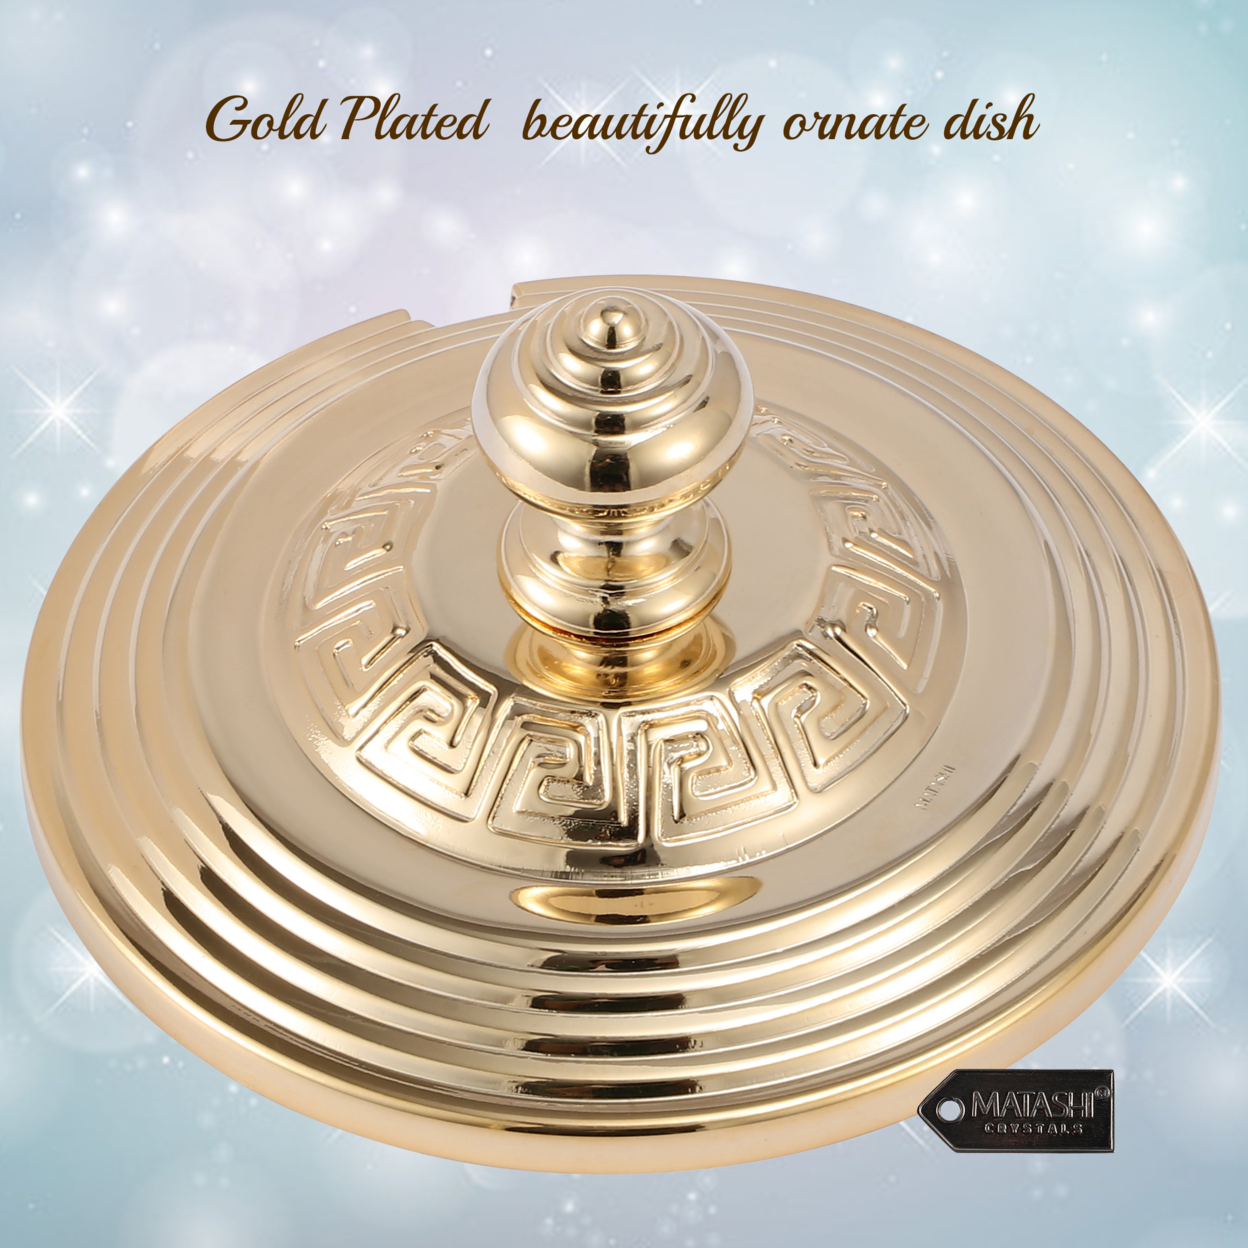 Matashi 24K Gold Plated Sugar Bowl, Honey Dish, Candy Dish Glass Bowl W/ Crystal Studded Spoon Gift For Christmas Weddings